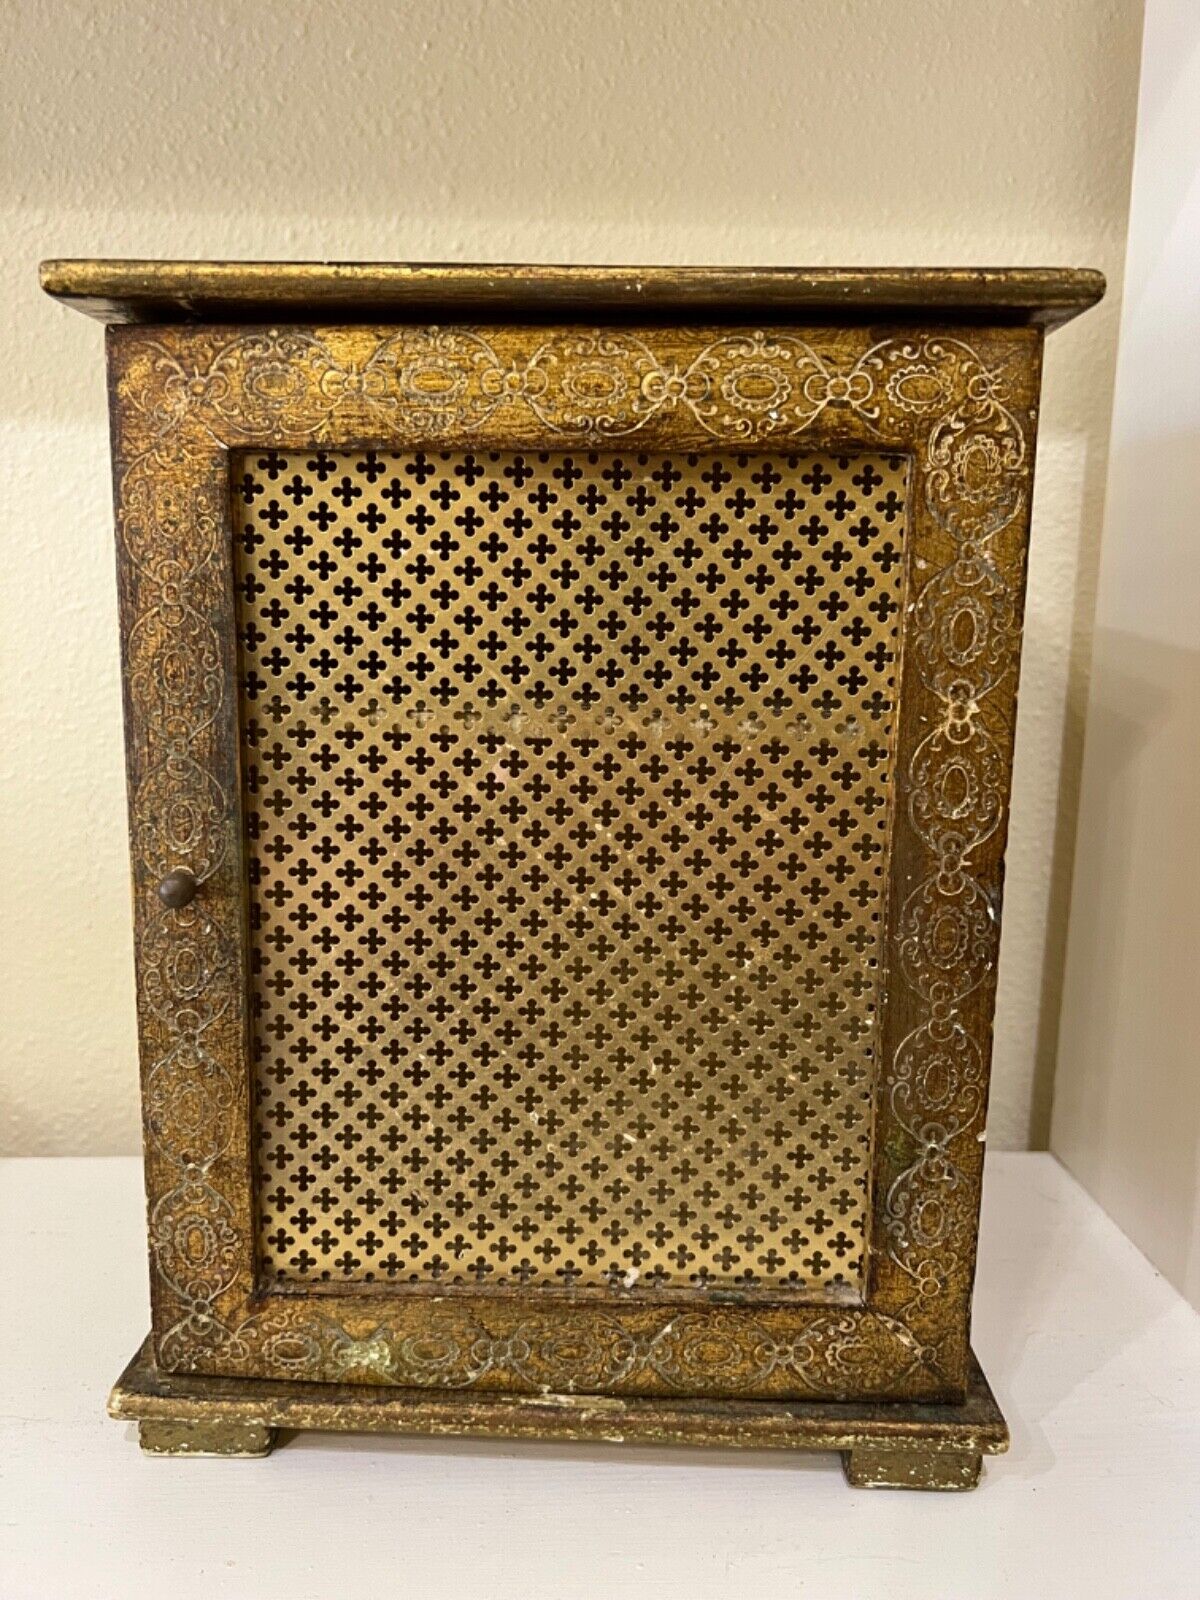 Ornate Gold Vtg Italy Italian Florentine Tole Wood Cabinet Holder Box Desk